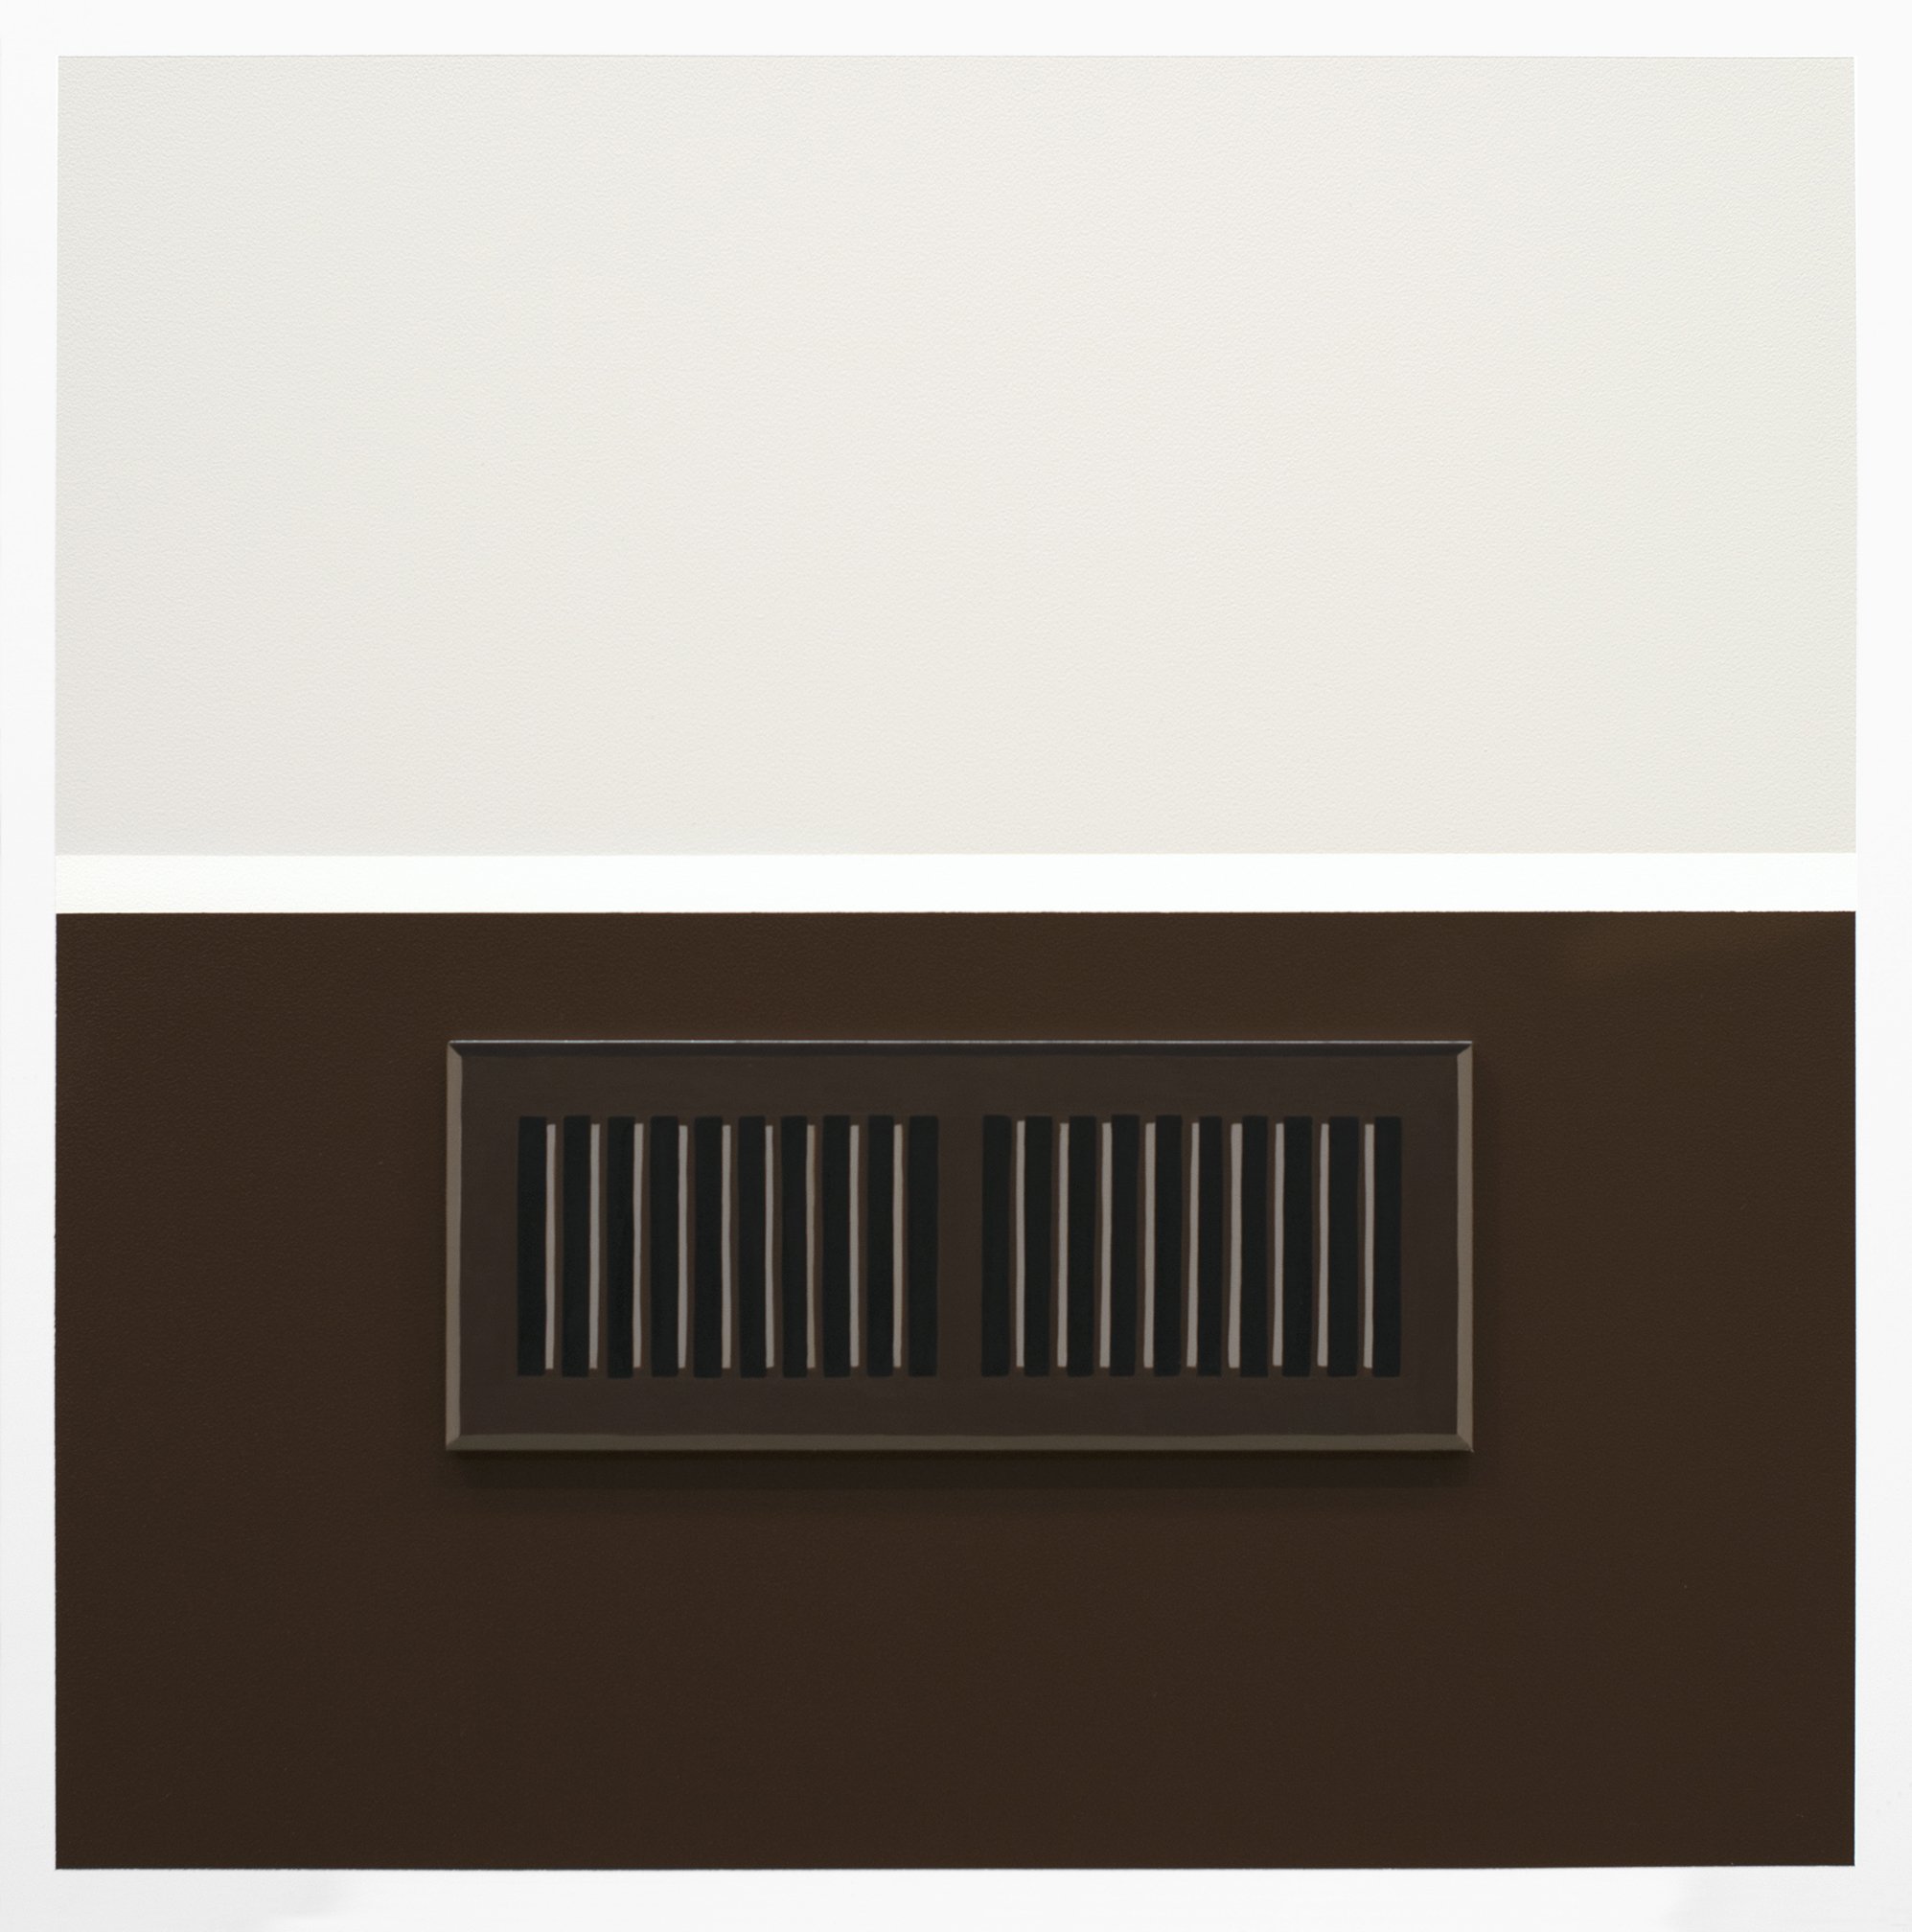   Juliette No. 1   2021, 23 1/2” h x 23 1/2” w x 1/2” d (overall).  Painting:  Oil on linen over panel,  5” x 13” x 1/2”. Wall:  Benjamin Moore: Balboa Mist #OC-27, Linen White #OC-146, Tudor Brown #HC-185. 